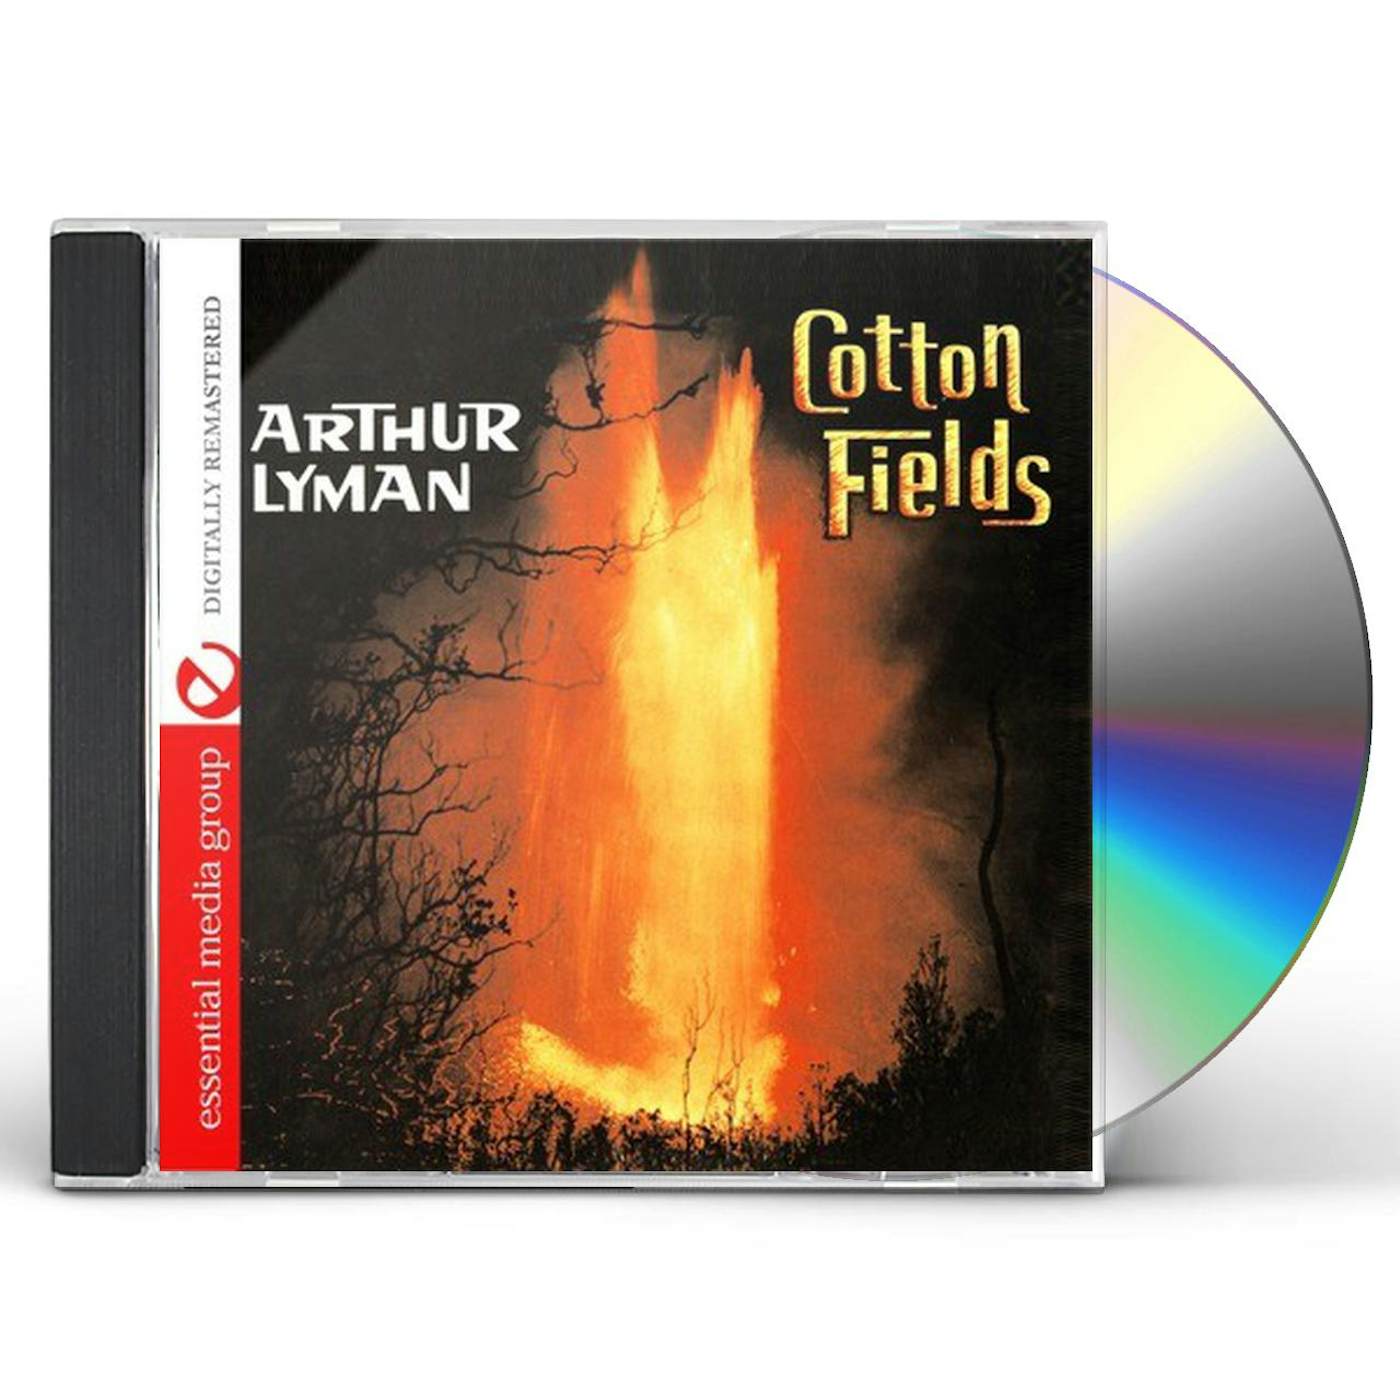 Arthur Lyman COTTON FIELDS CD